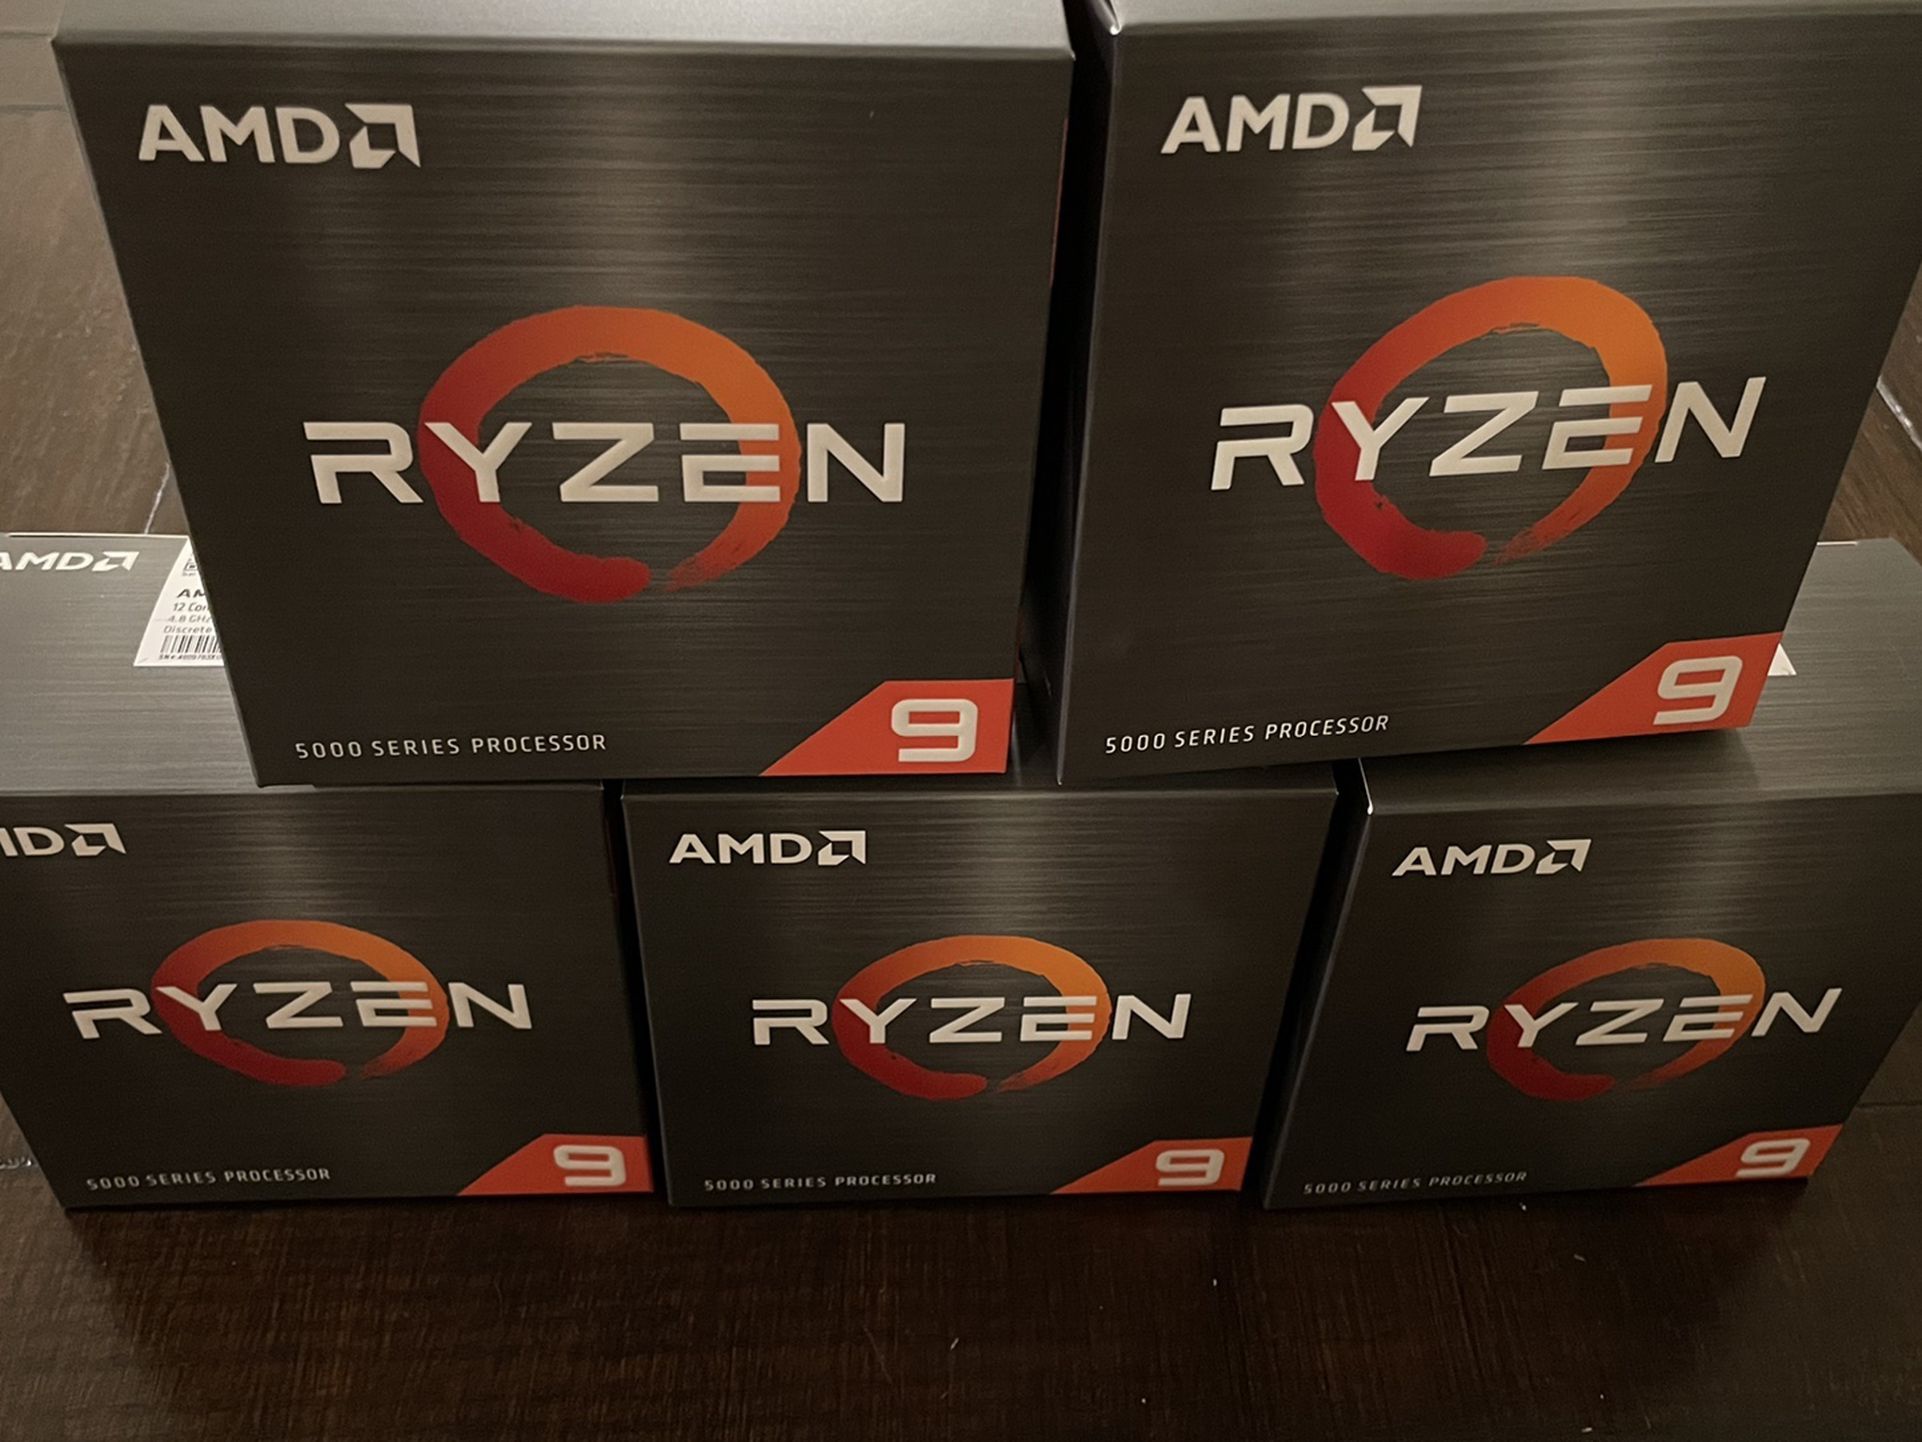 AMD Ryzen No 9 5900X 12-core/24-thread Desktop Processor